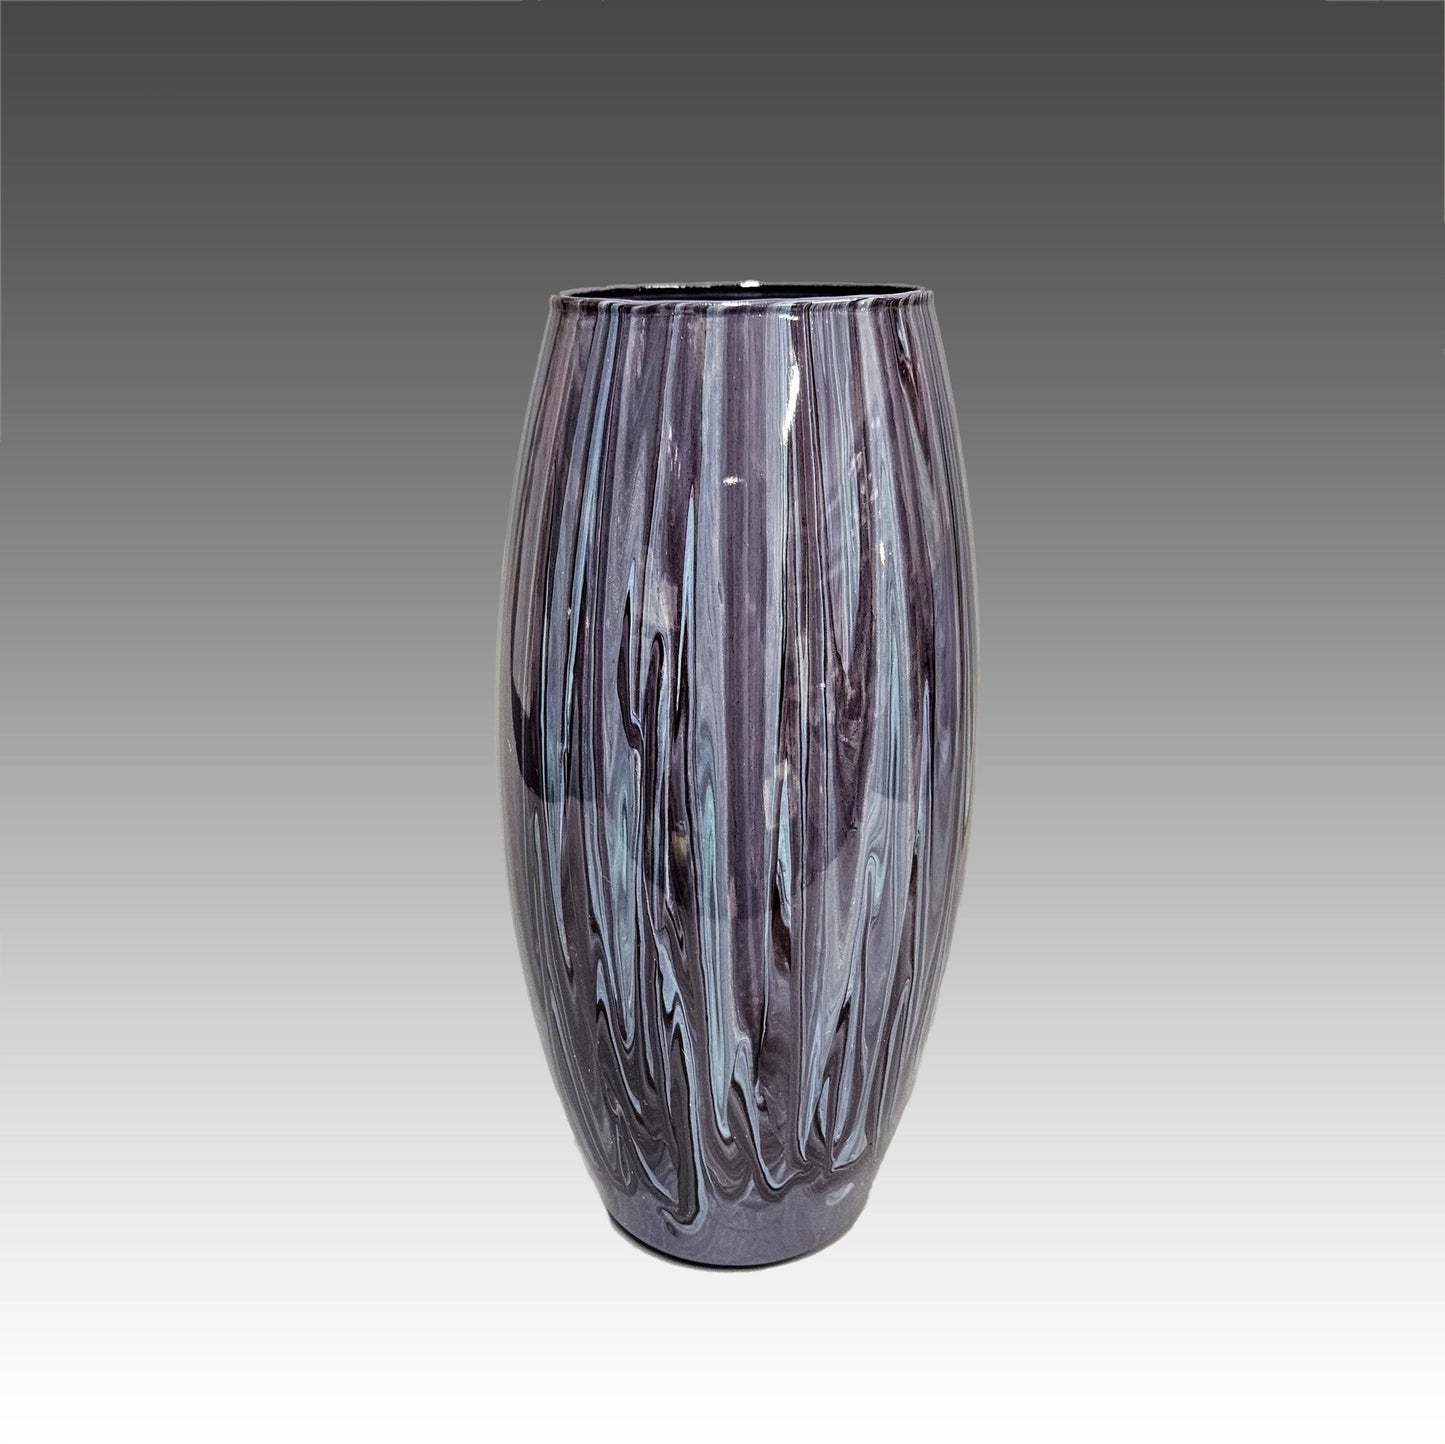 Fluid Art Vase in Black Purple Gray